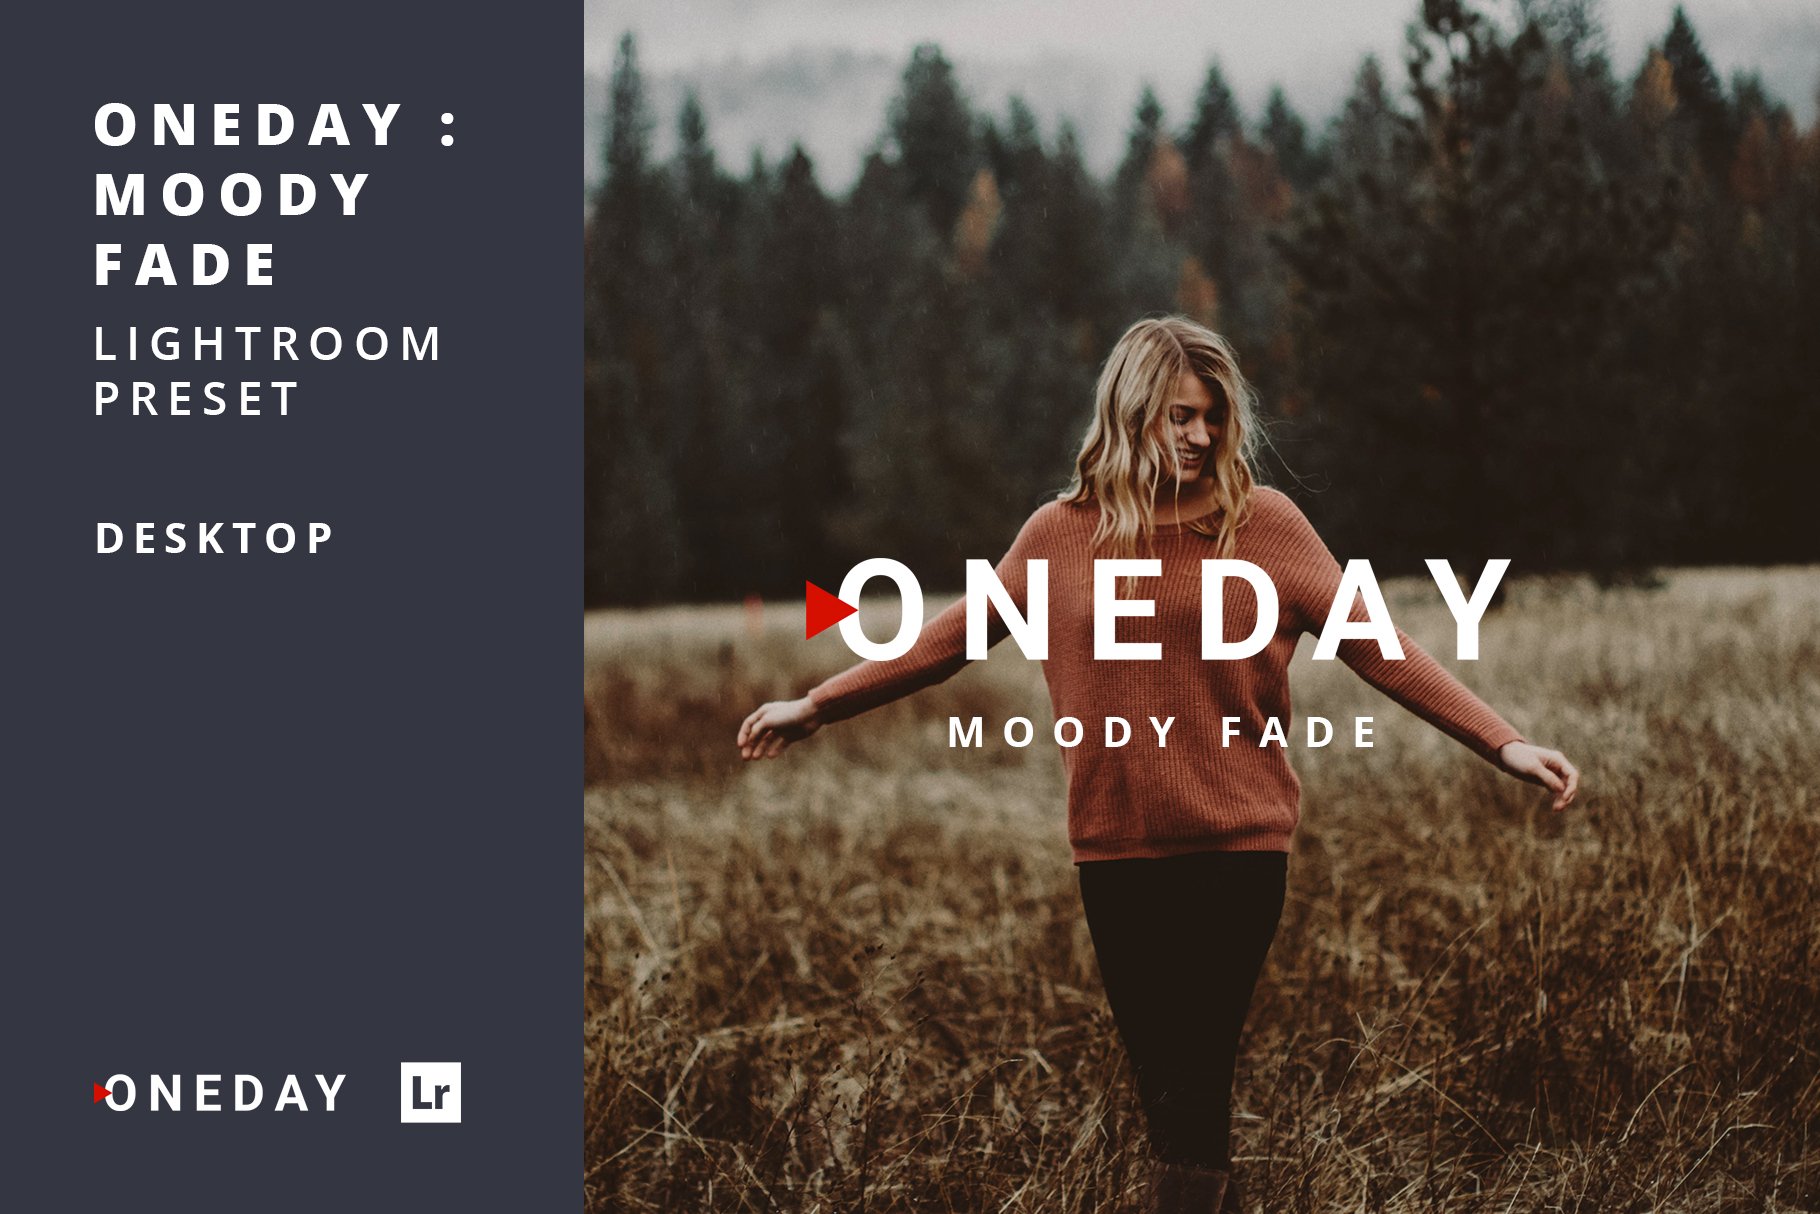 Oneday : Moody Fade Lightroom presetcover image.